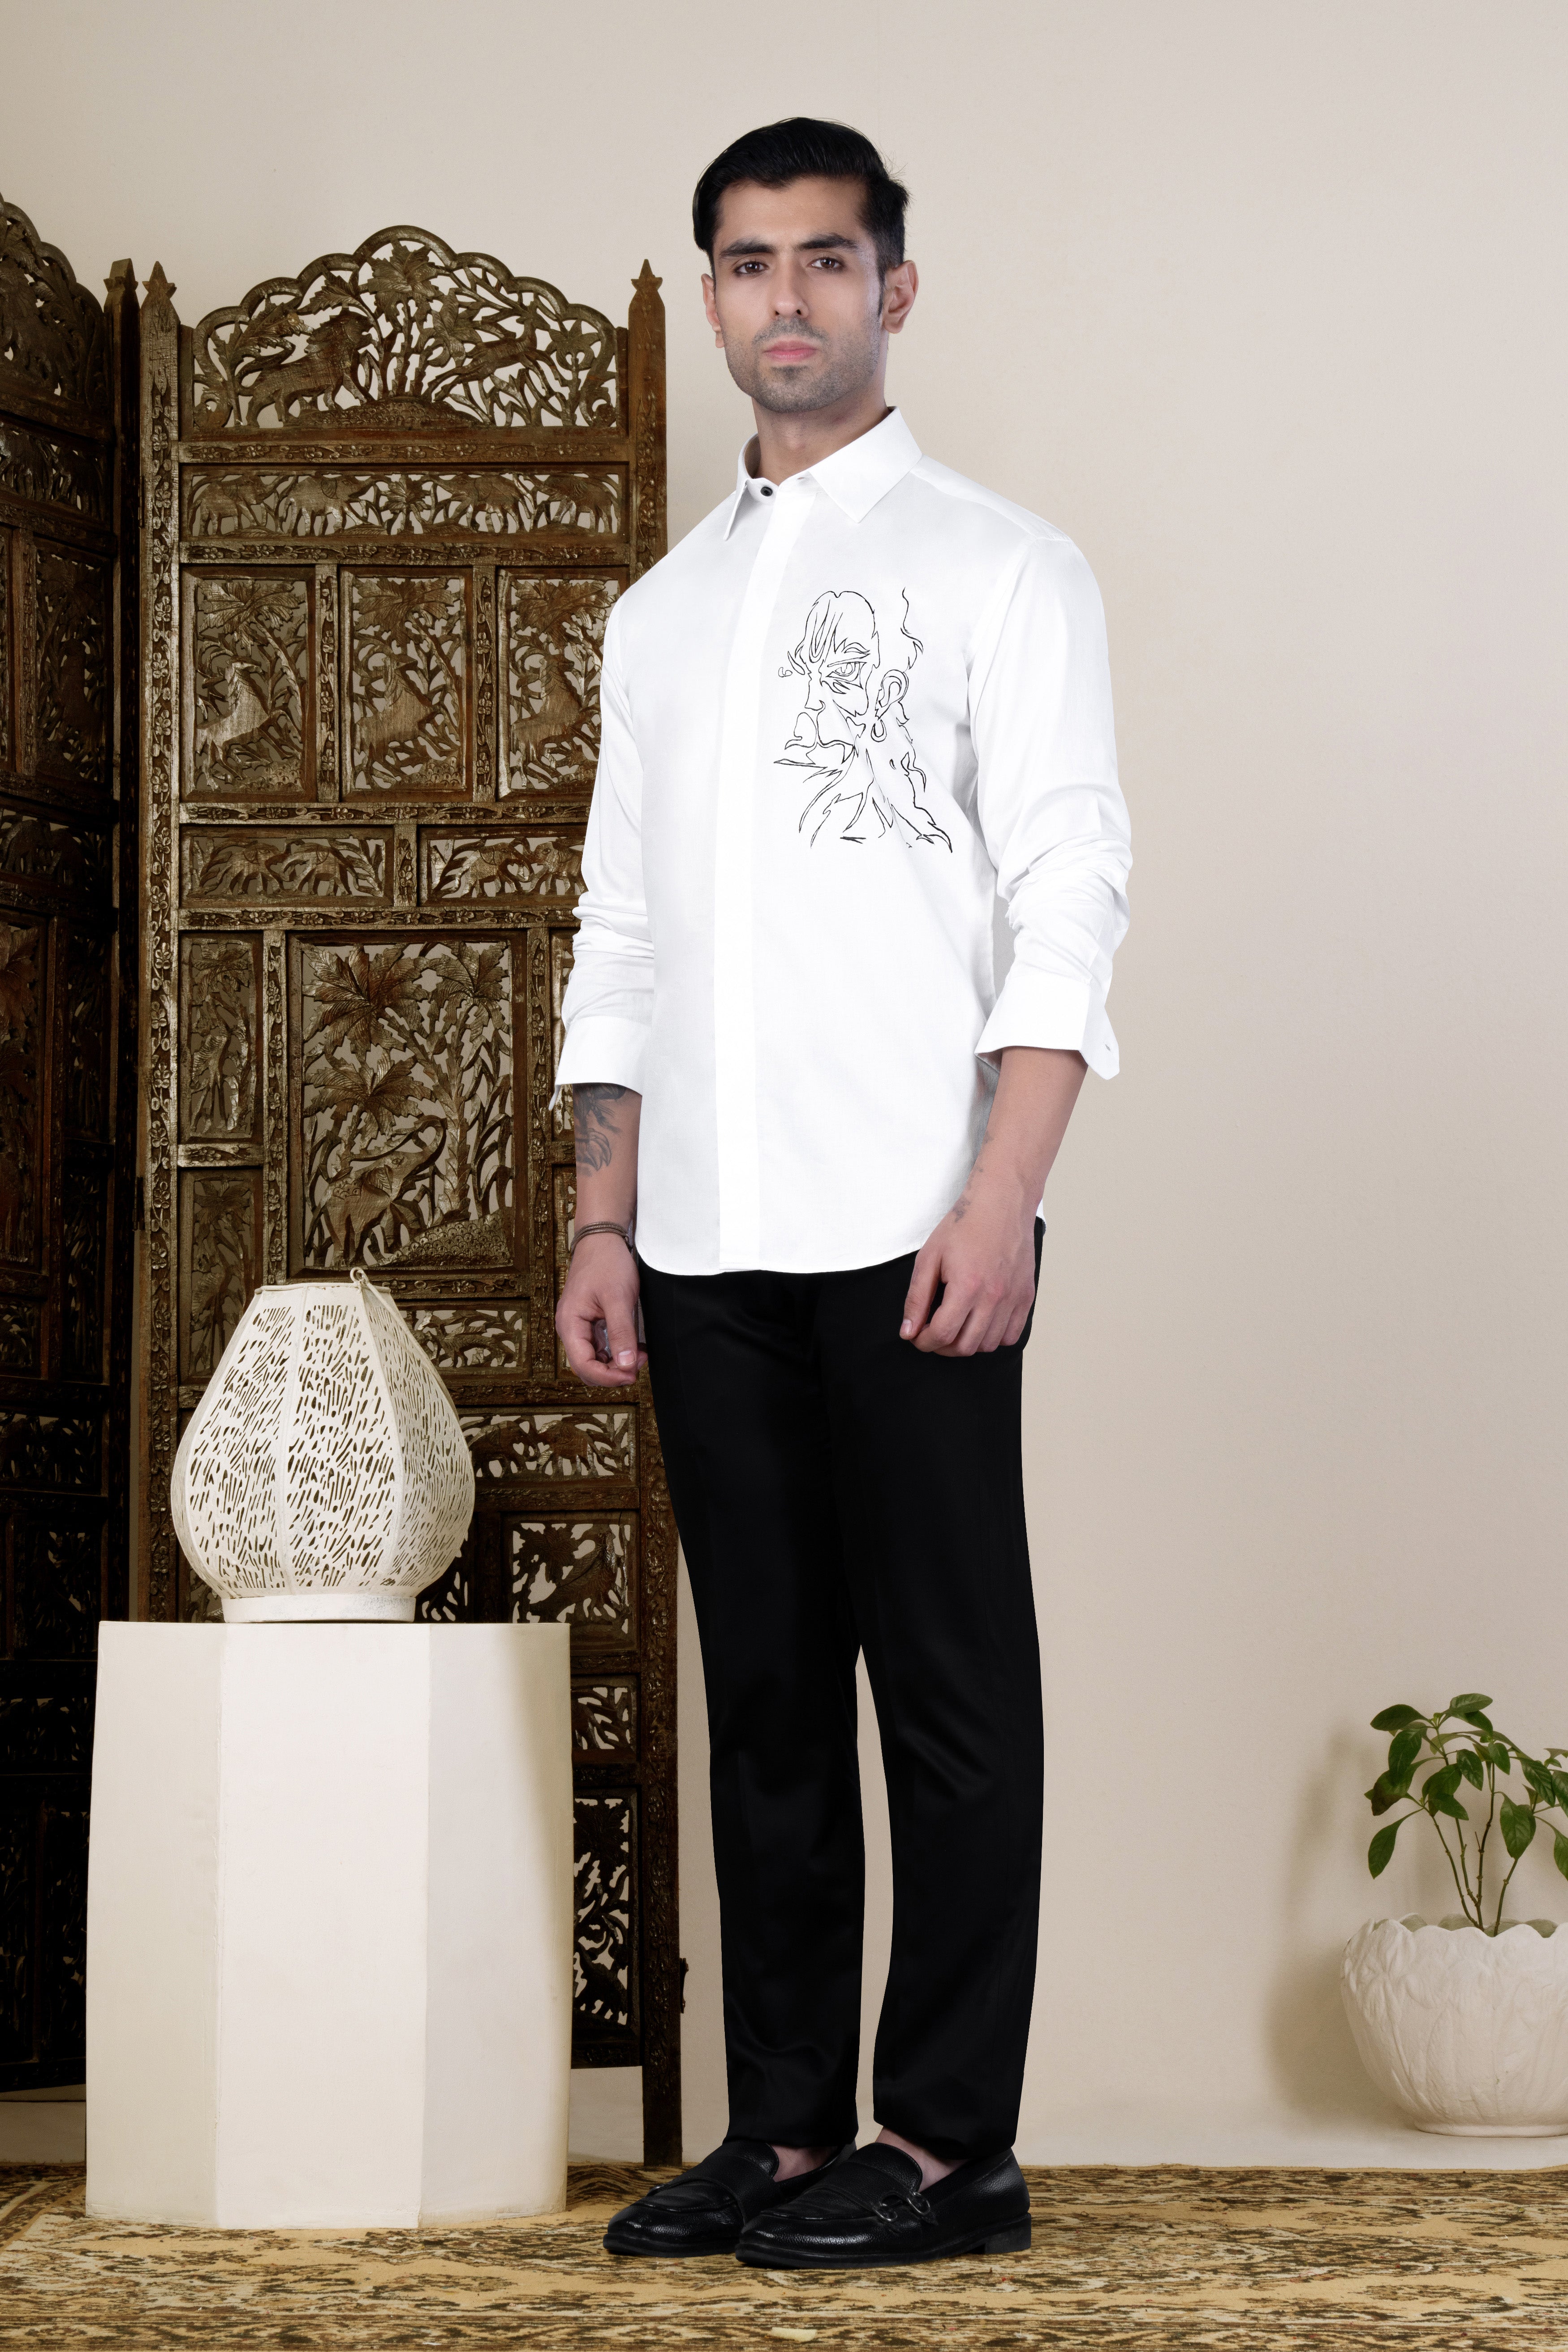 Bright White Lord Hanuman Hand Painted Subtle Sheen Super Soft Premium Cotton Designer Shirt 12170-NP-BLK-P782-38, 12170-NP-BLK-P782-H-38, 12170-NP-BLK-P782-39, 12170-NP-BLK-P782-H-39, 12170-NP-BLK-P782-40, 12170-NP-BLK-P782-H-40, 12170-NP-BLK-P782-42, 12170-NP-BLK-P782-H-42, 12170-NP-BLK-P782-44, 12170-NP-BLK-P782-H-44, 12170-NP-BLK-P782-46, 12170-NP-BLK-P782-H-46, 12170-NP-BLK-P782-48, 12170-NP-BLK-P782-H-48, 12170-NP-BLK-P782-50, 12170-NP-BLK-P782-H-50, 12170-NP-BLK-P782-52, 12170-NP-BLK-P782-H-52